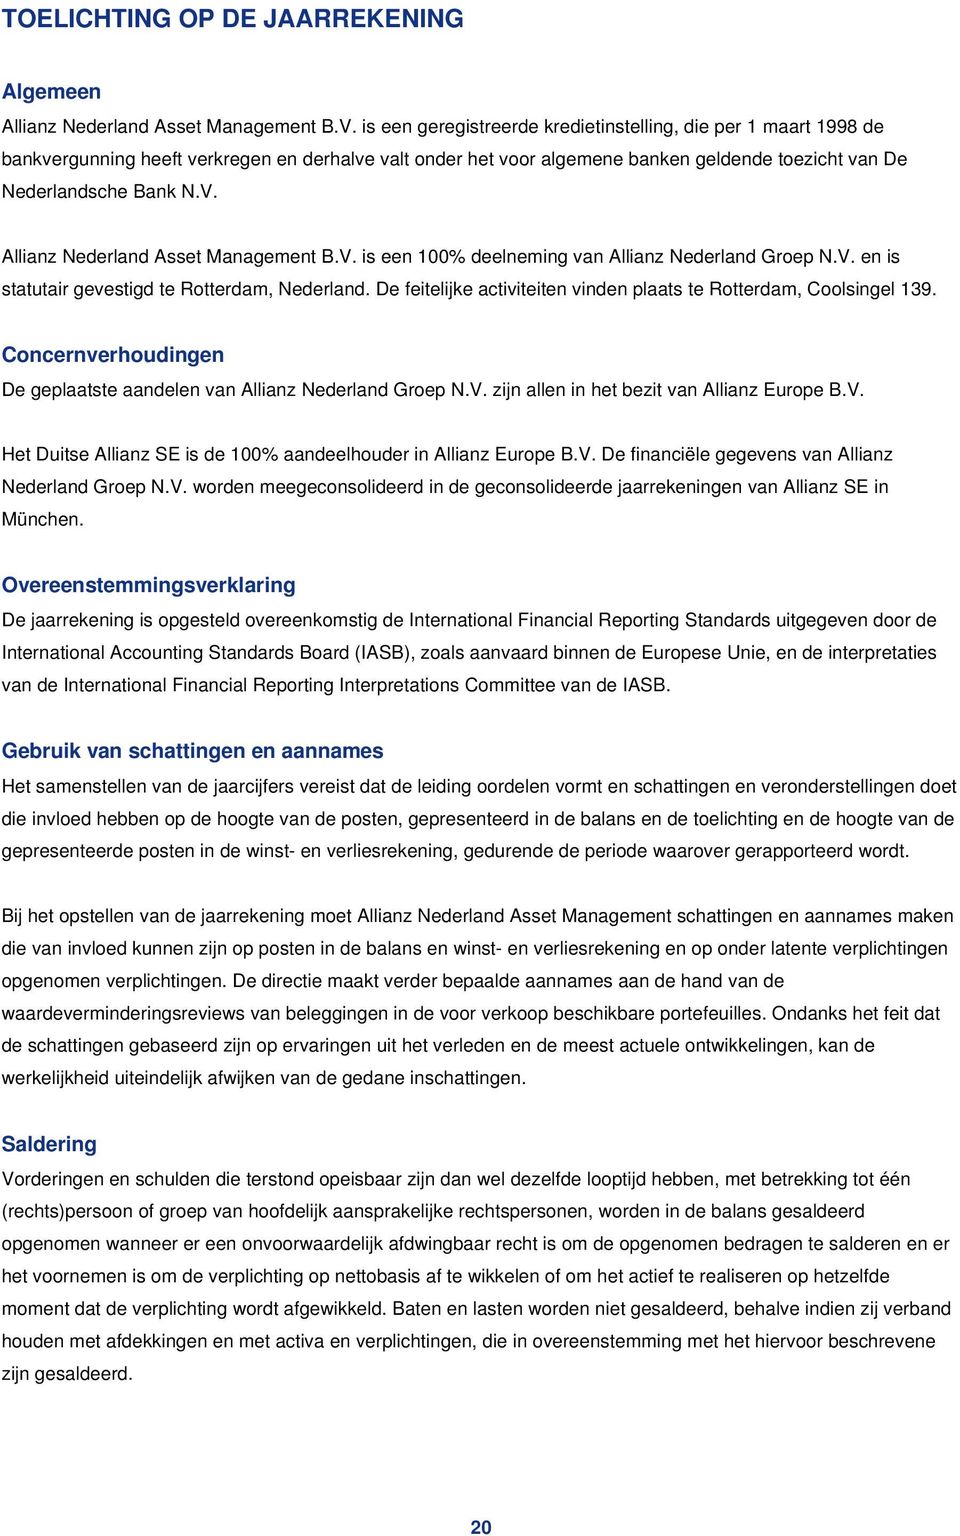 Allianz Nederland Asset Management B.V. is een 100% deelneming van Allianz Nederland Groep N.V. en is statutair gevestigd te Rotterdam, Nederland.